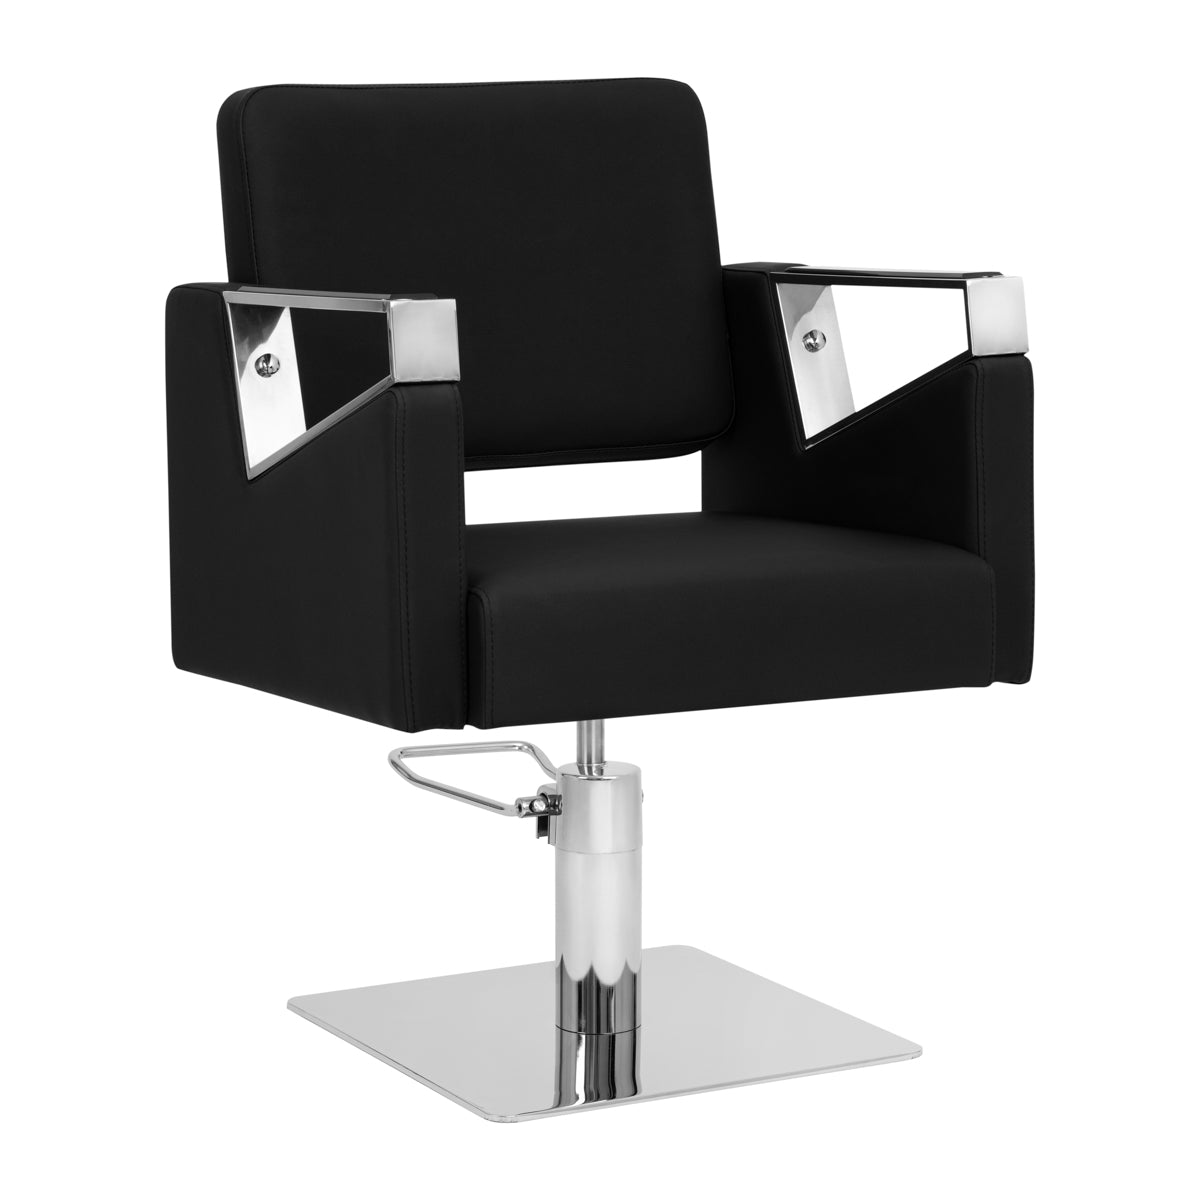 Gabbiano black hairdressing chair